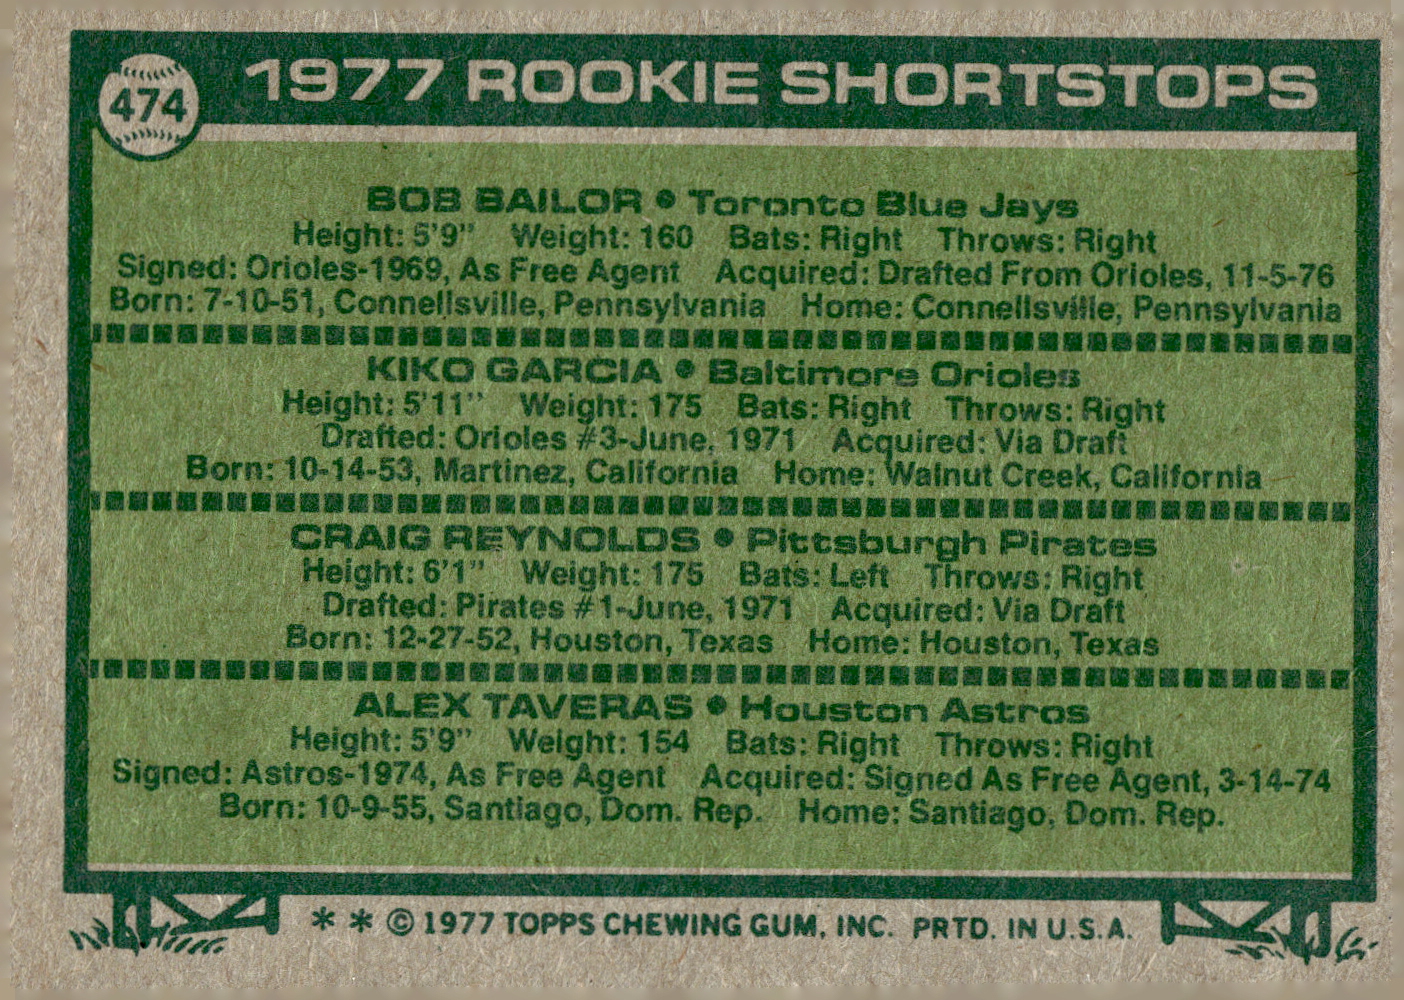 1977 Topps #474 Rookie Shortstops/Bob Bailor RC/Kiko Garcia RC/Craig Reynolds/Alex Taveras RC back image